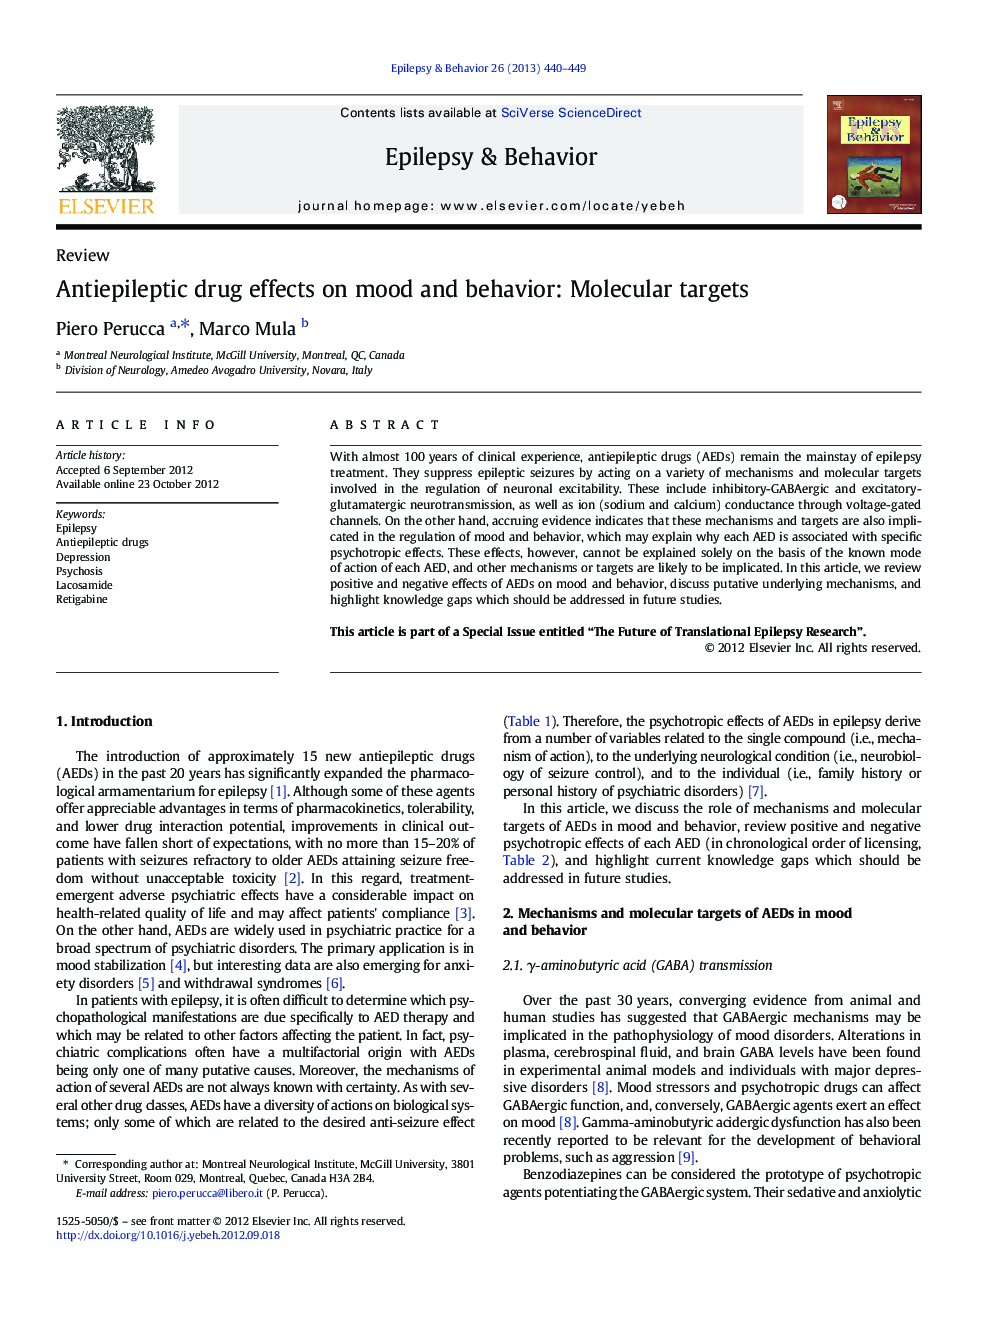 Antiepileptic drug effects on mood and behavior: Molecular targets